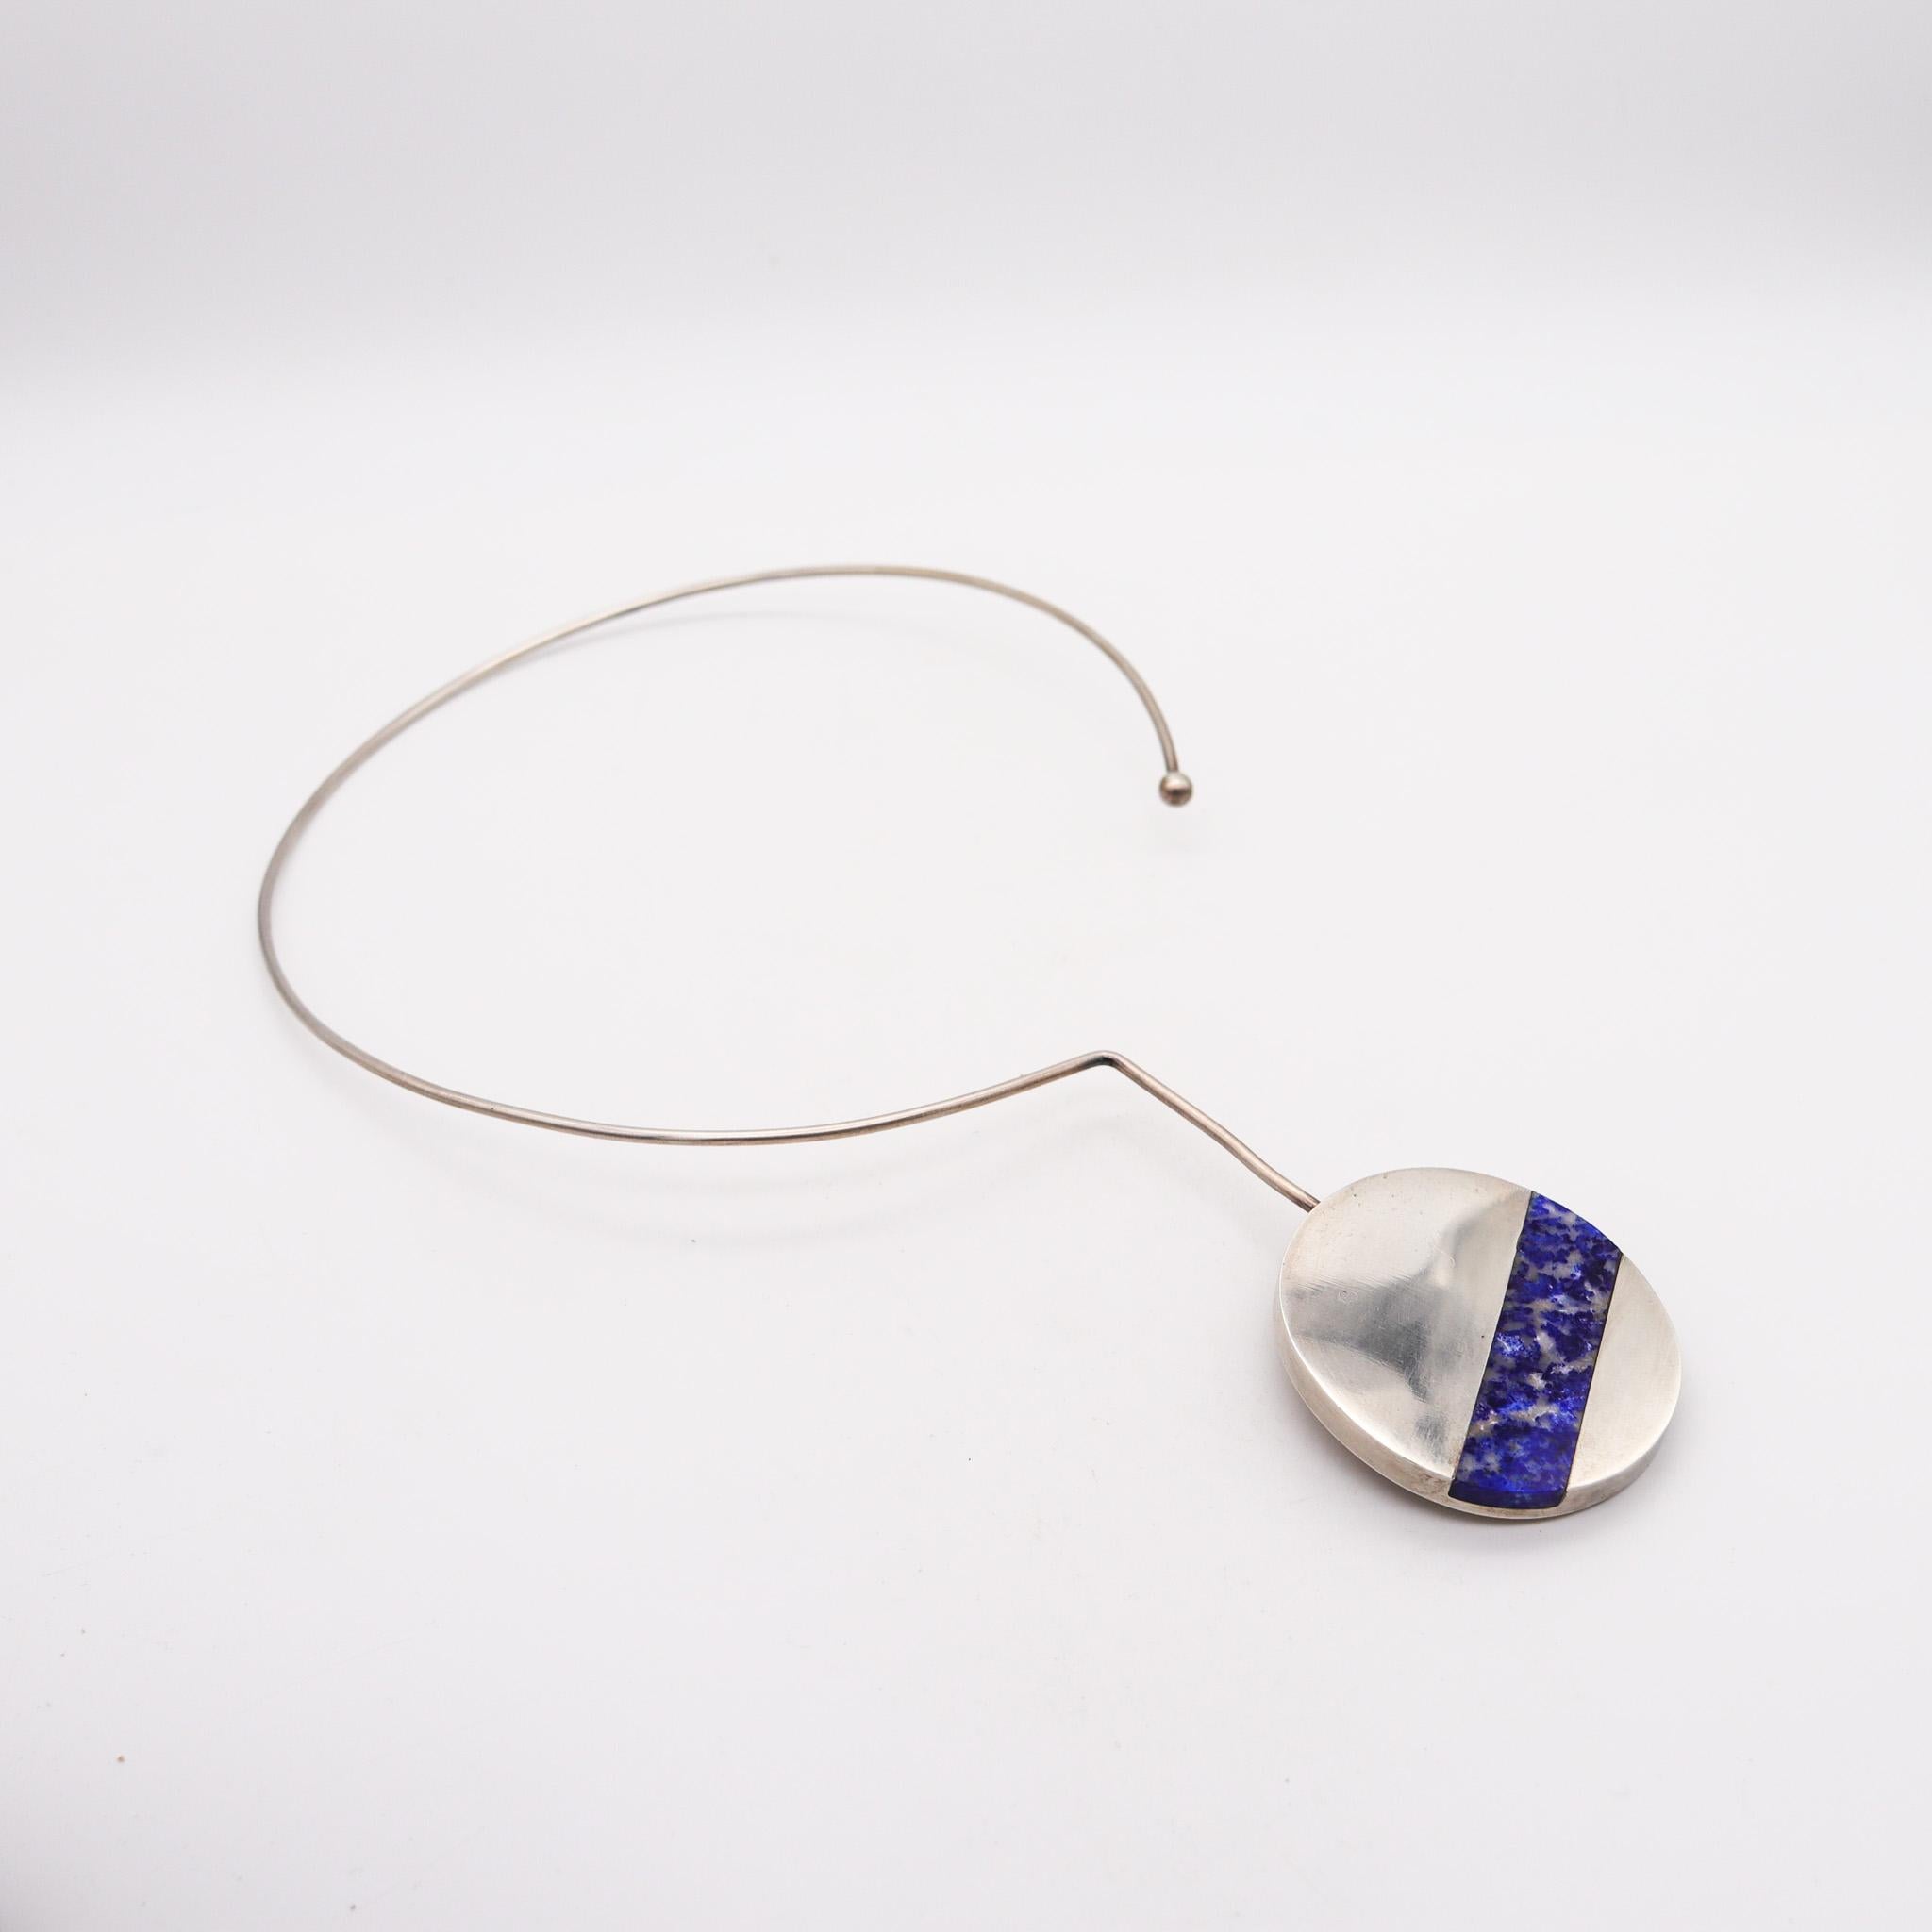 Modernist Poul Trige Sørresiig 1966 Denmark Wire Necklace 925 Sterling Silver and Sodalite For Sale